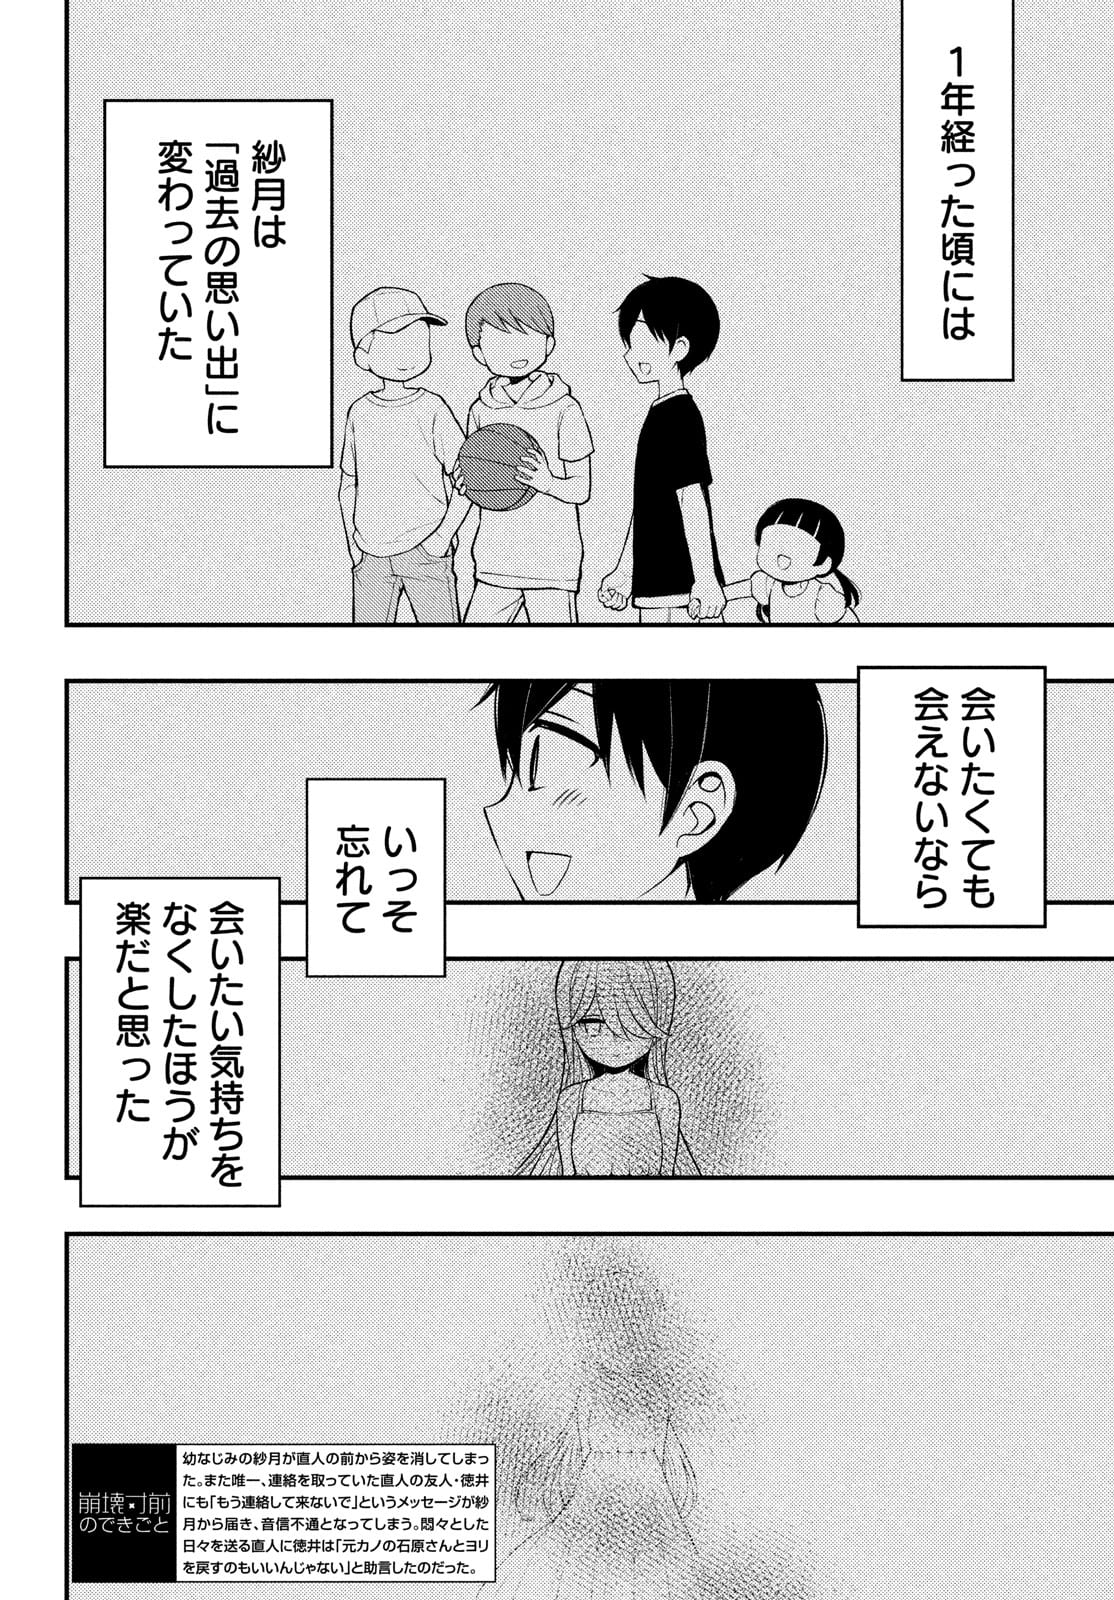 Watari-kun no xx ga Houkai Sunzen - Chapter 68 - Page 2